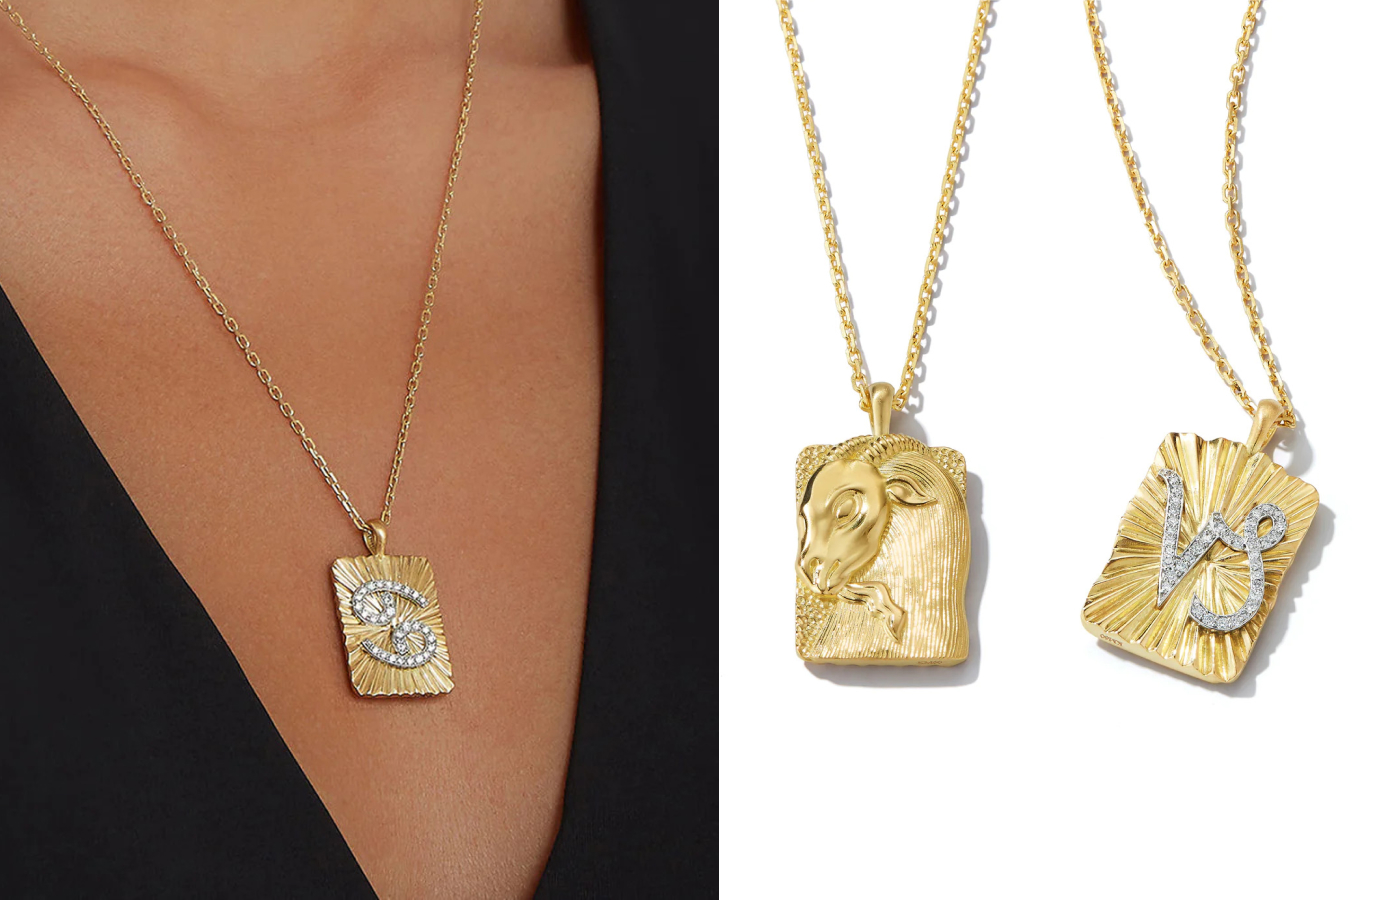 David Webb Zodiac necklaces in gold and diamond